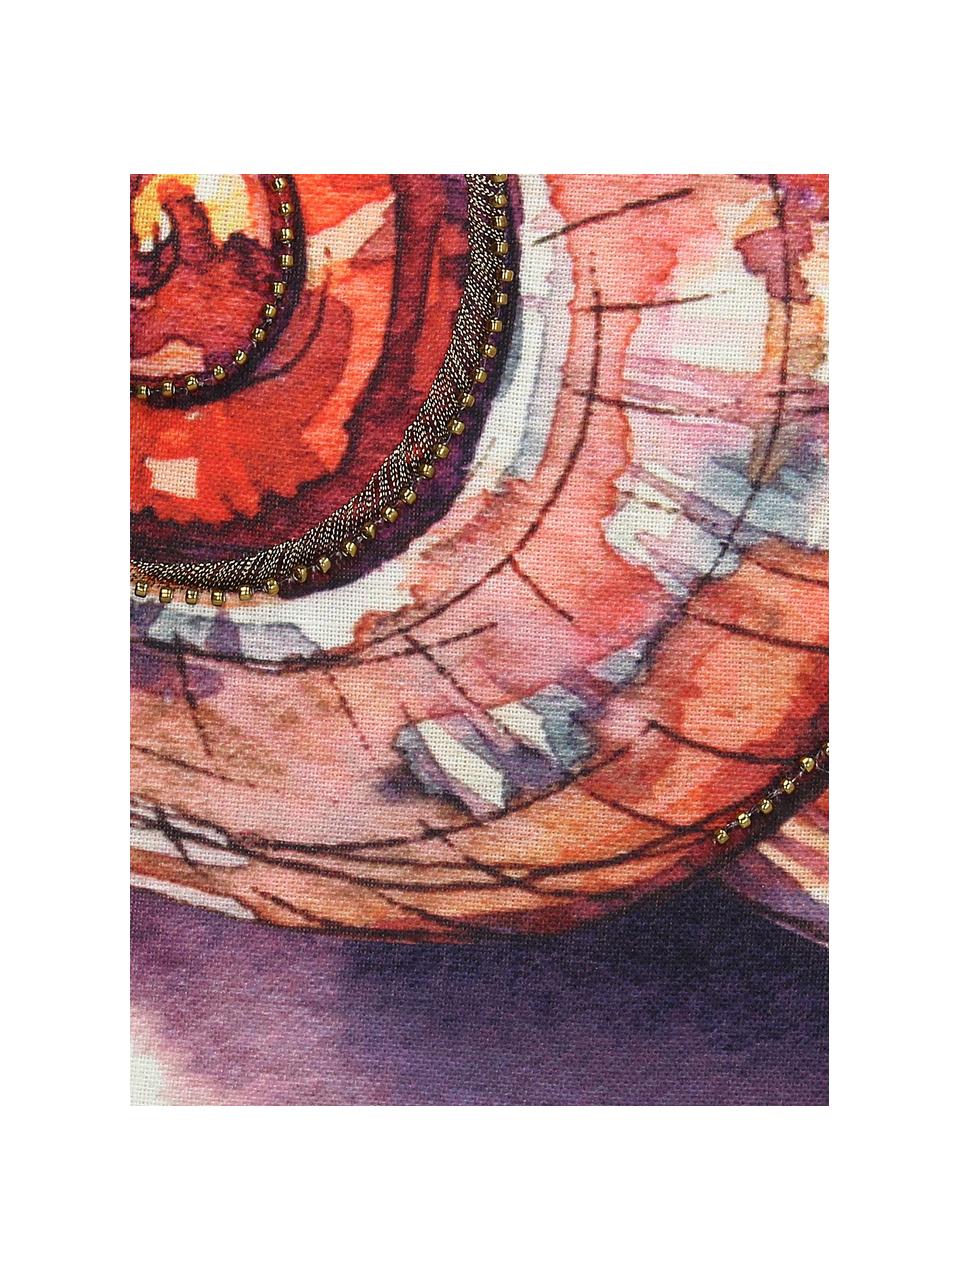 Cuscino con perline ricamate Snail, Beige, multicolore, Larg. 45 x Lung. 45 cm